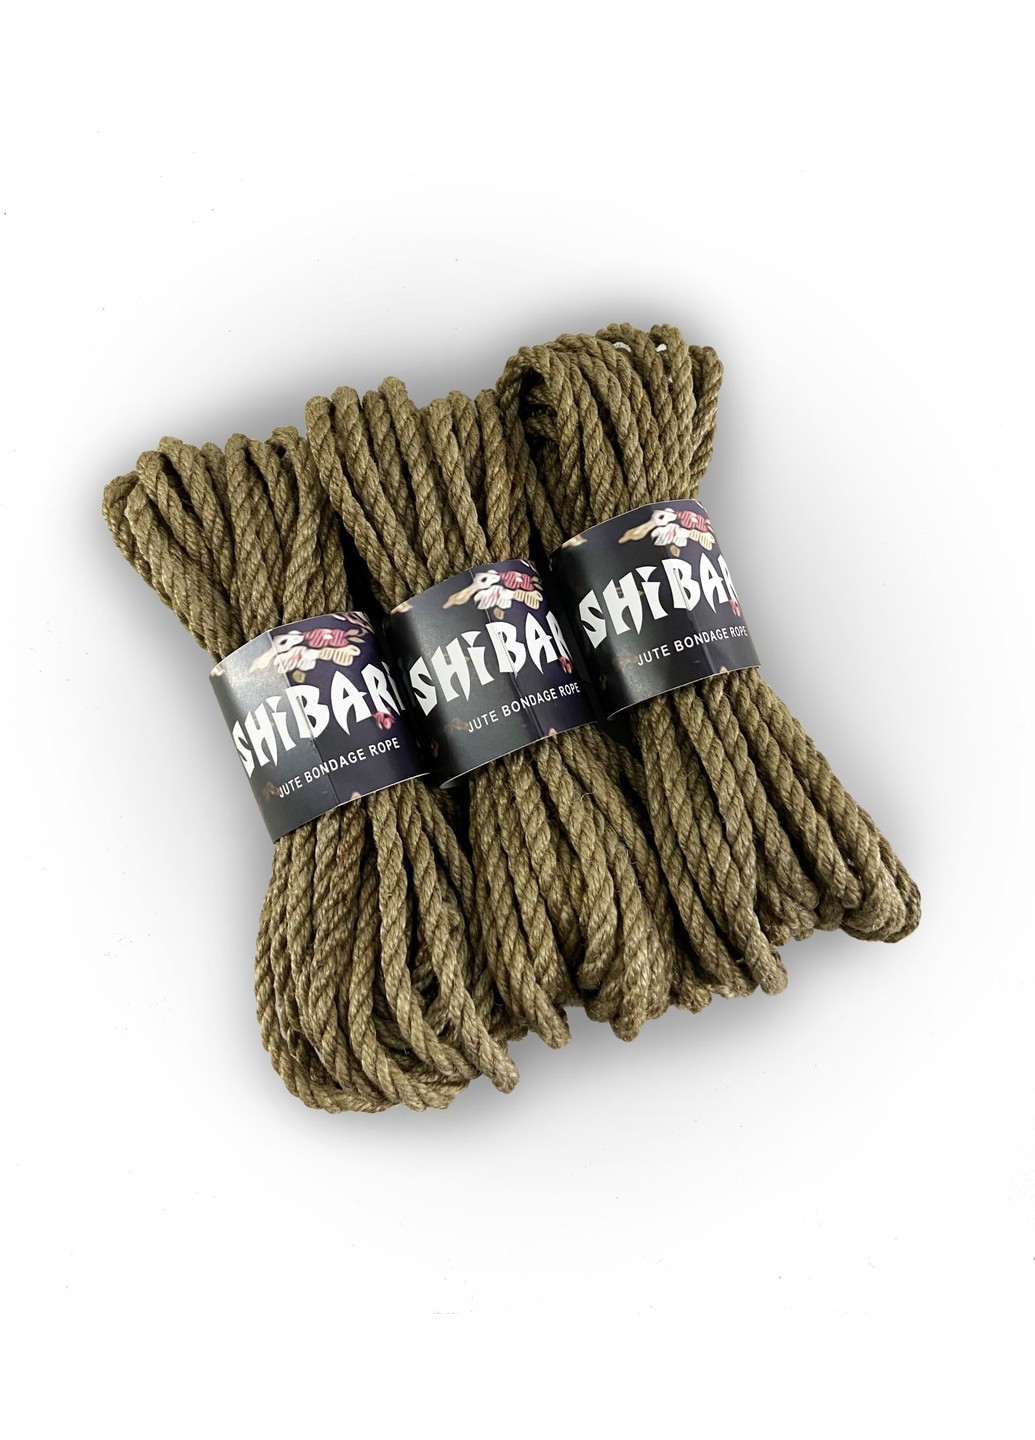 Джутовая веревка для Шибари Shibari Rope, 8 м серая Feral Feelings (255340363)